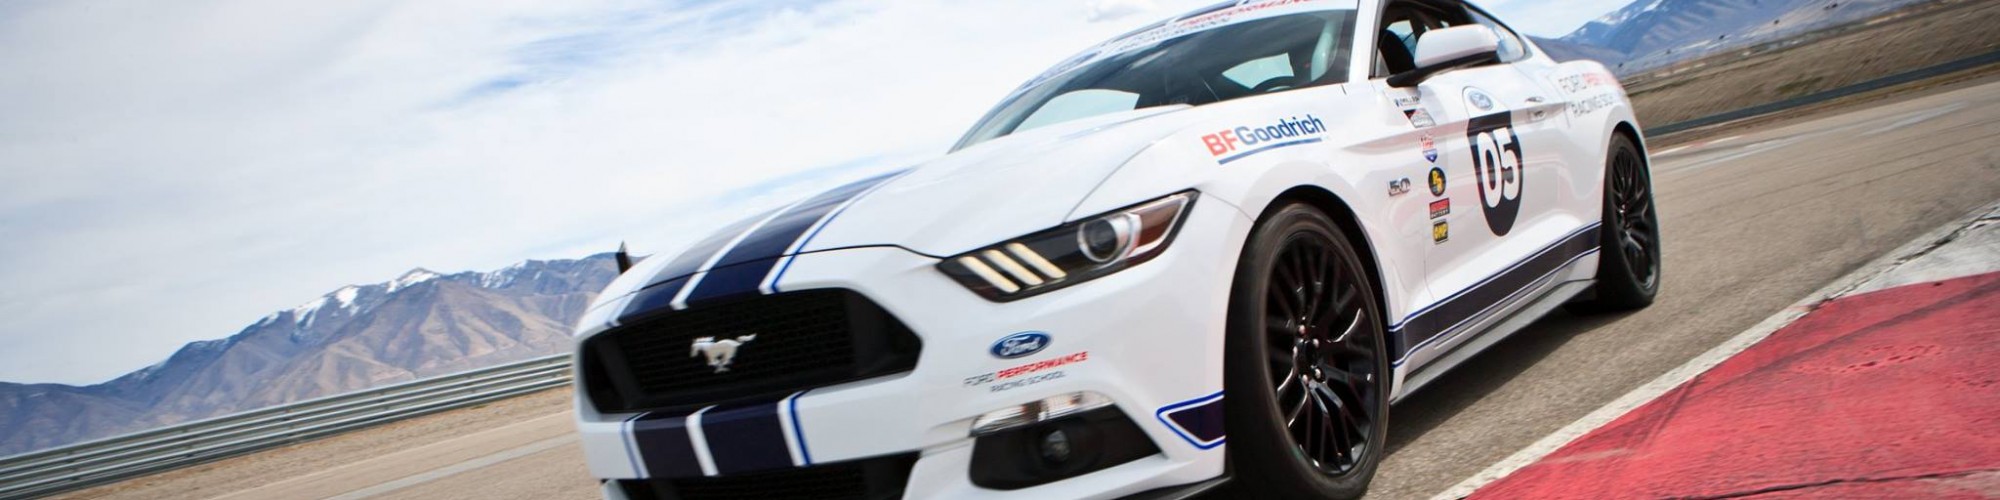 Ford Performance Racing School 